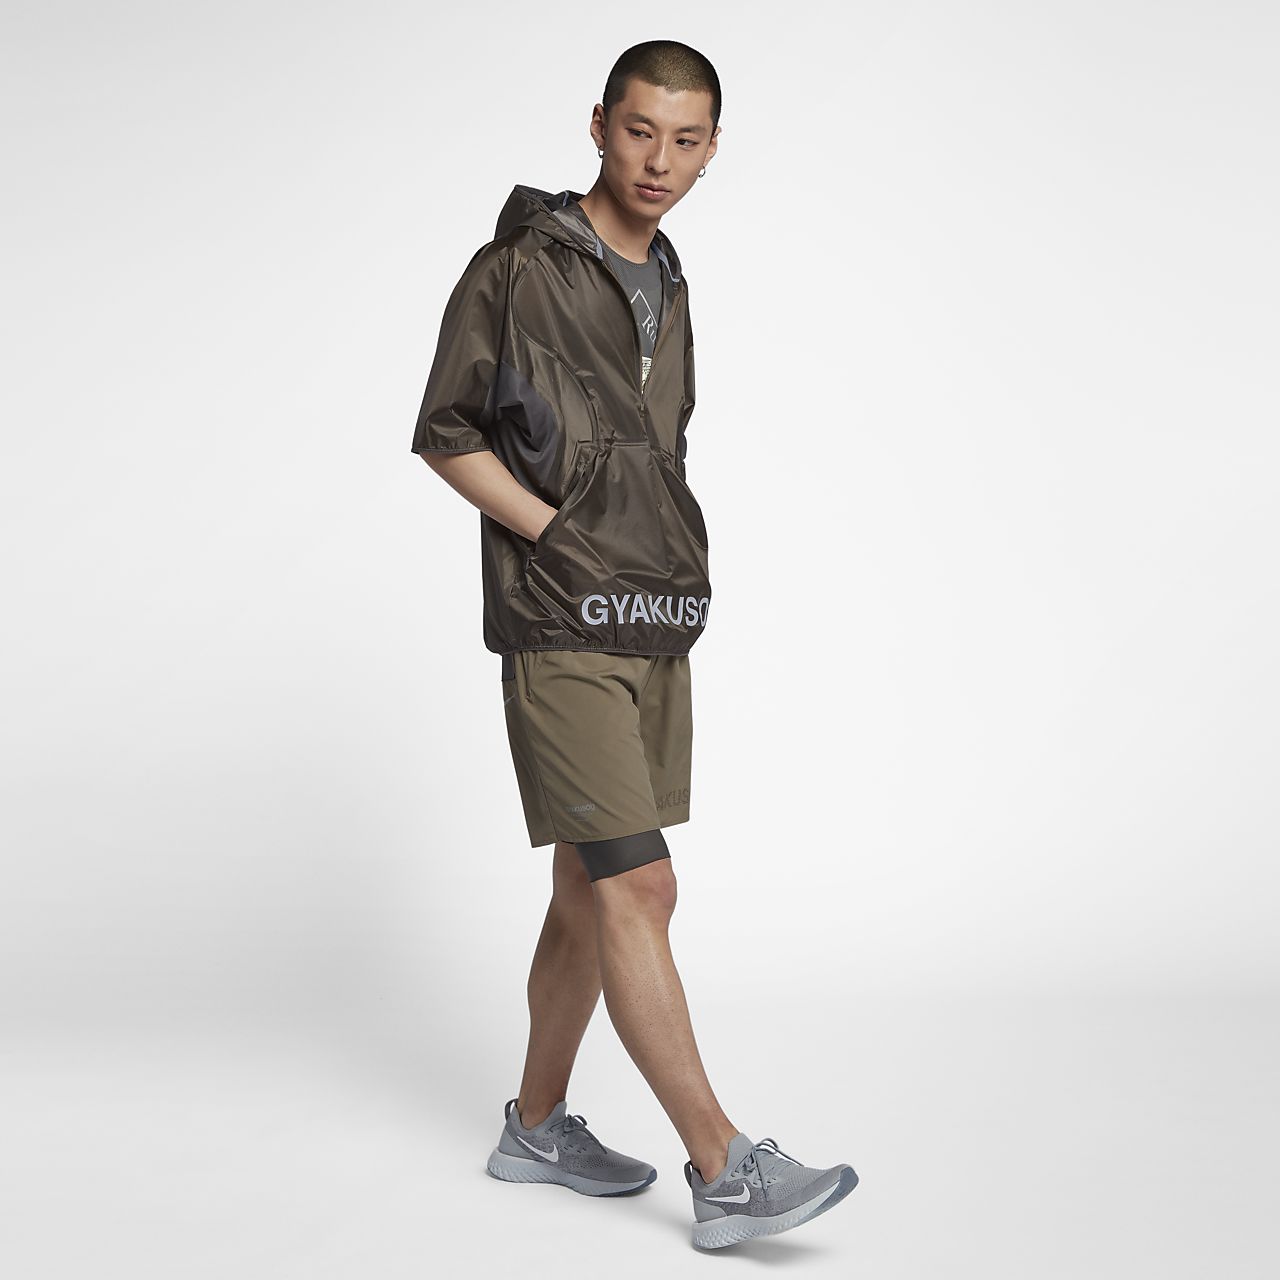 Nike Gyakusou Men's Short Sleeve Packable Jacket